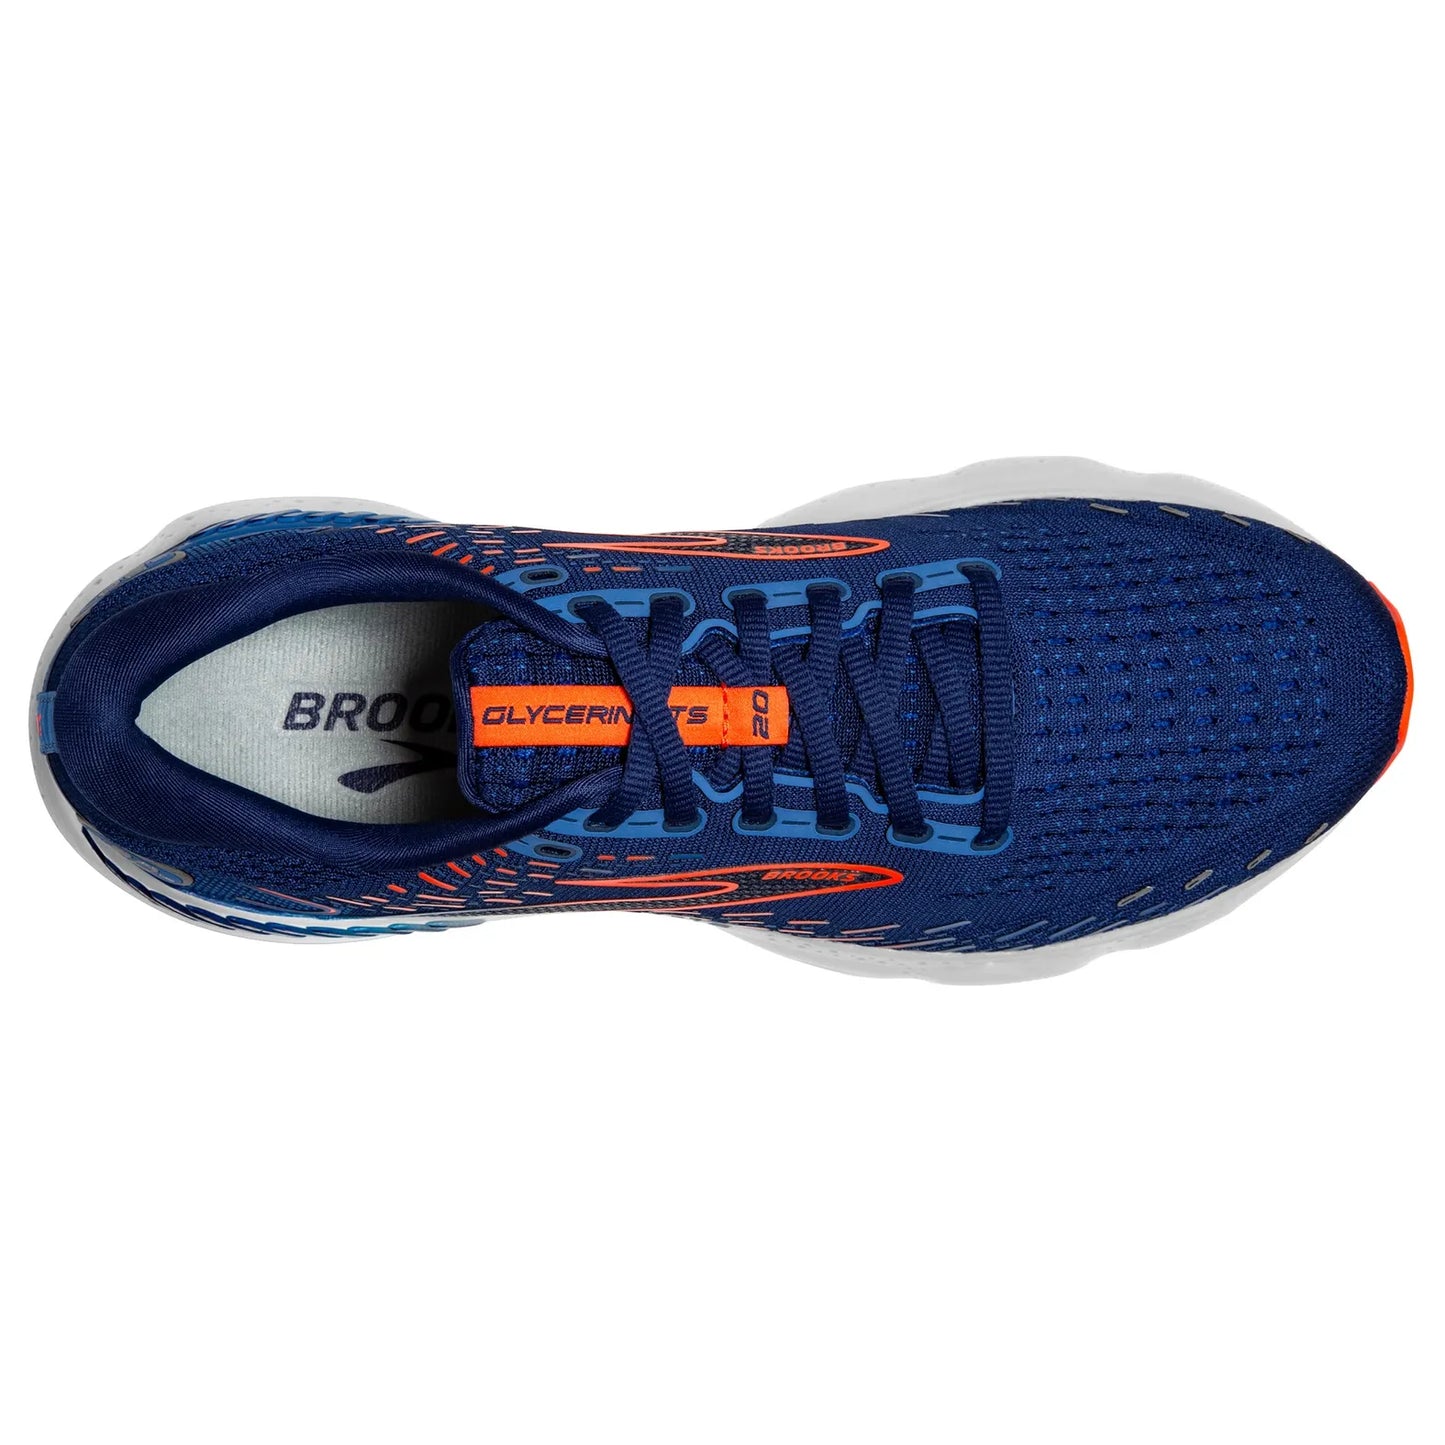 GLYCERINE BLUE | at Brandy's shoes